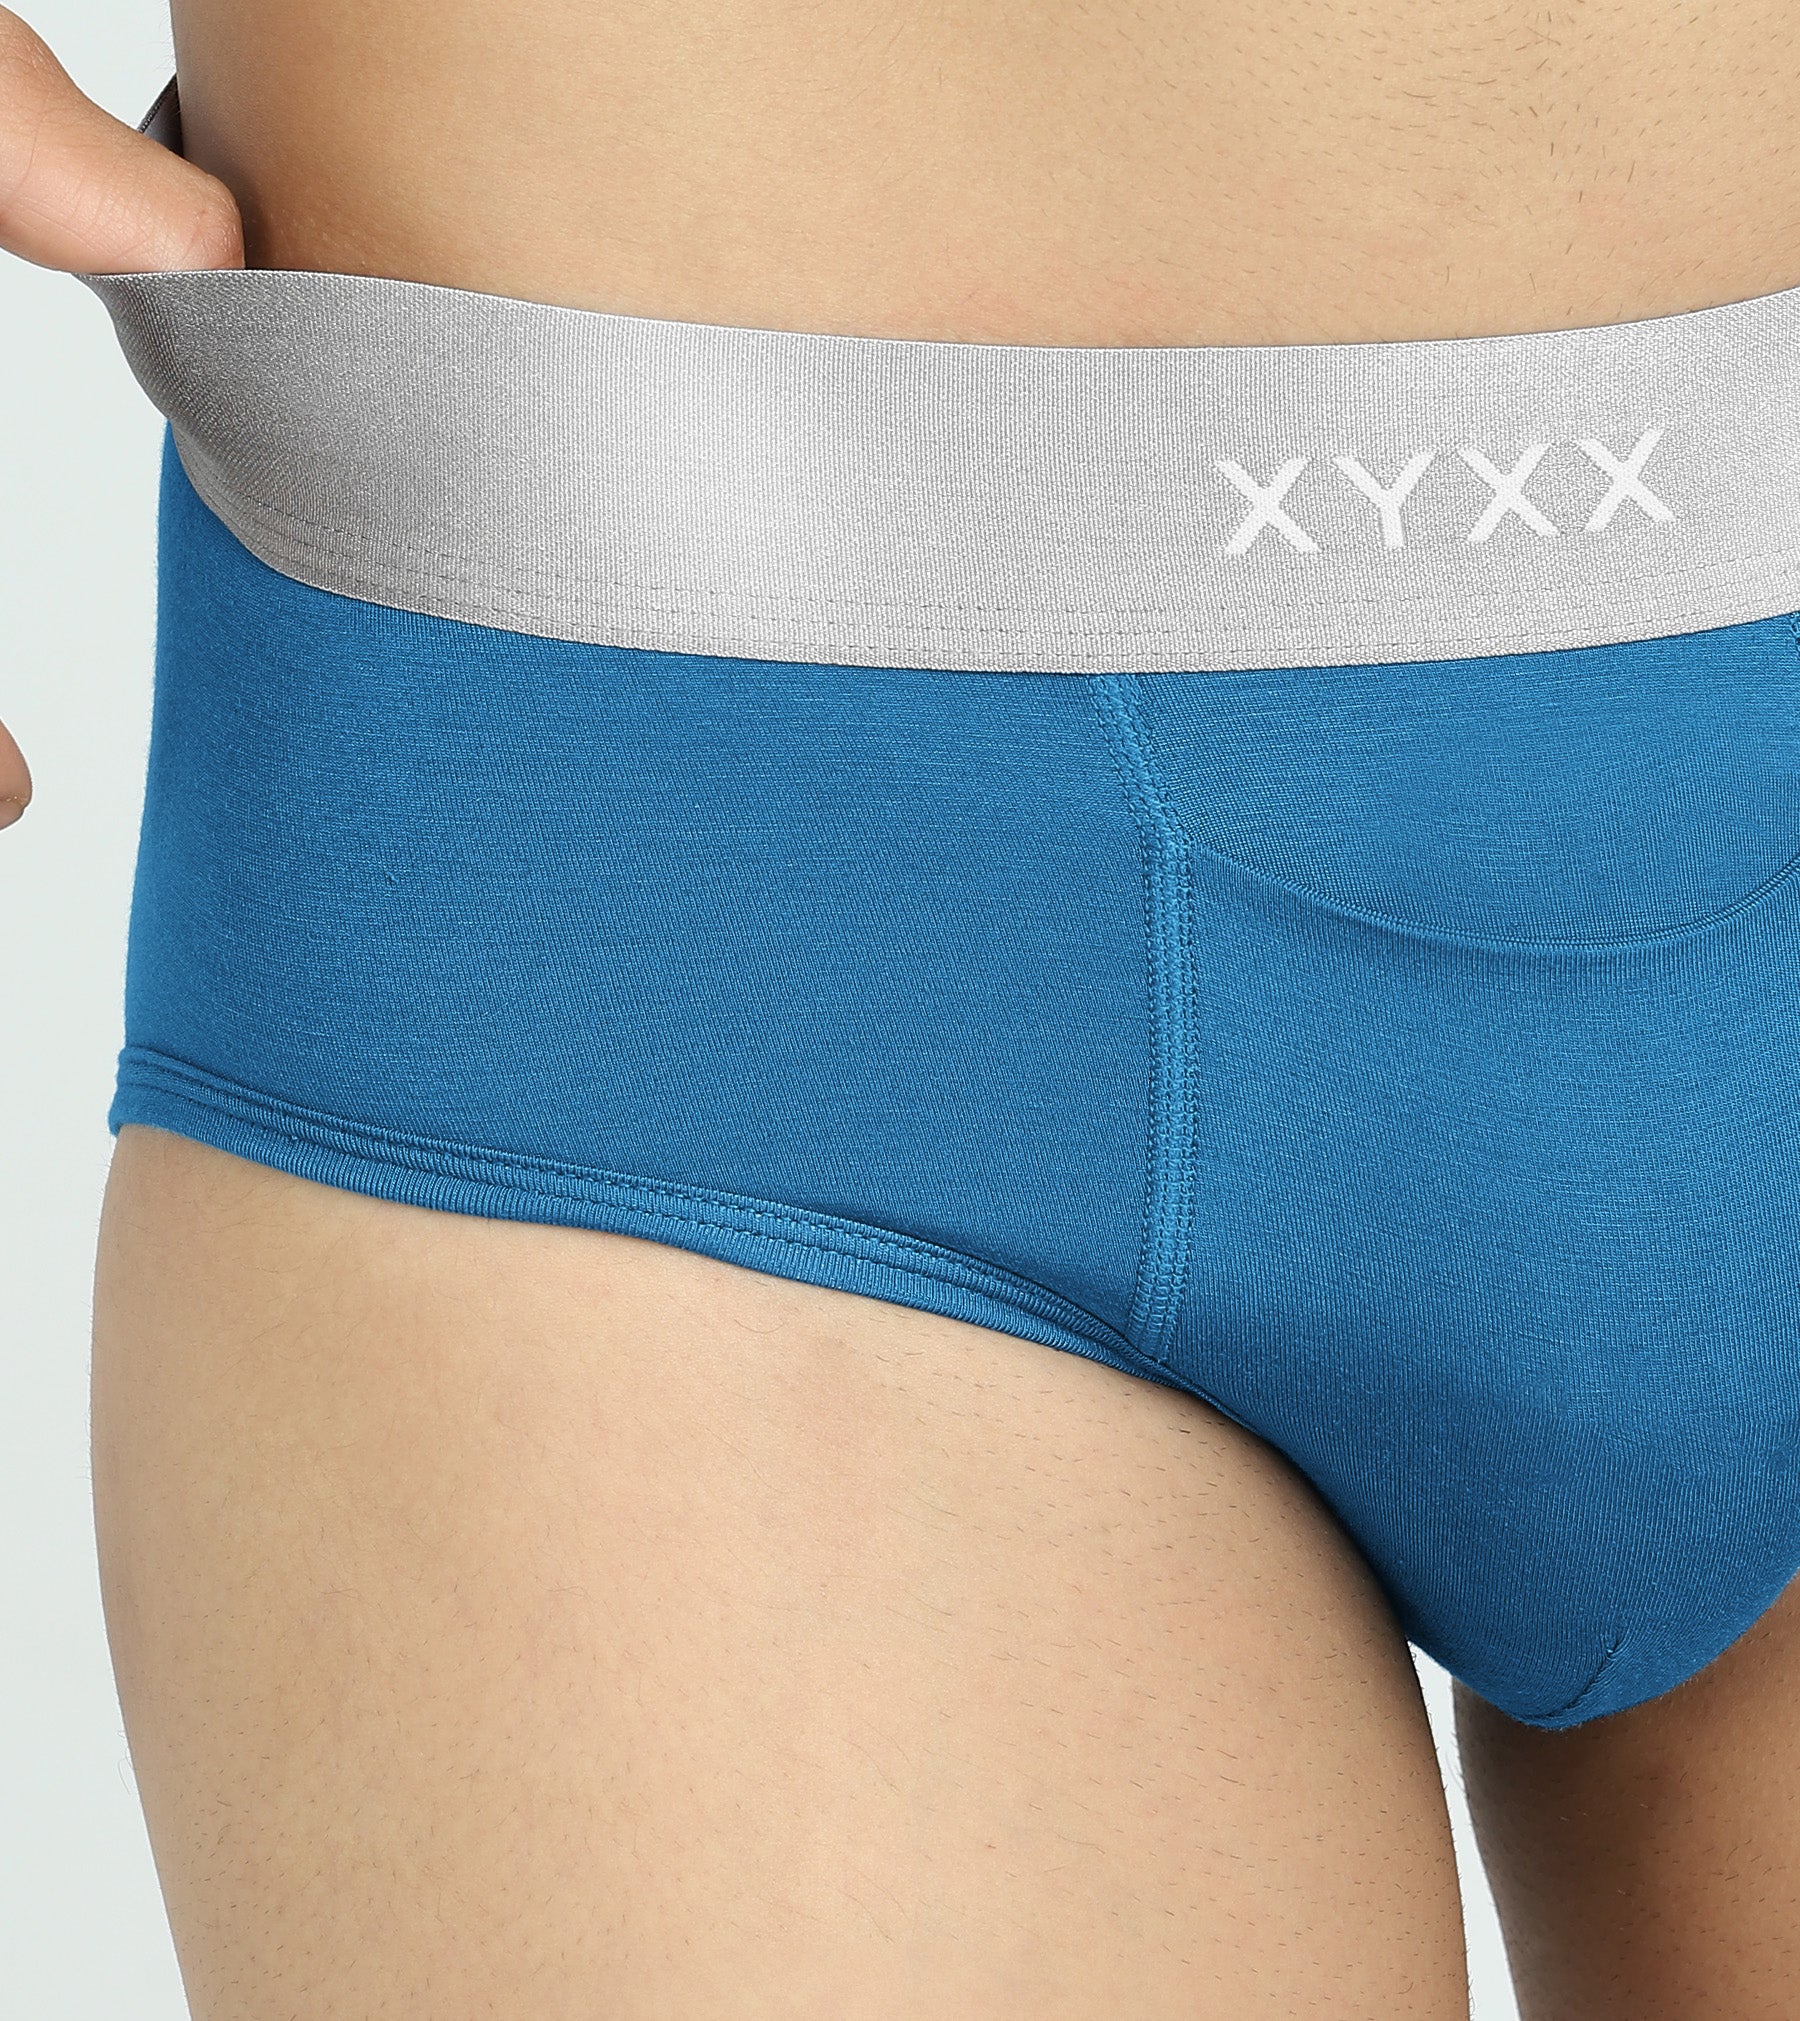 Illuminati Modal Briefs For Men Port Blue -  XYXX Mens Apparels